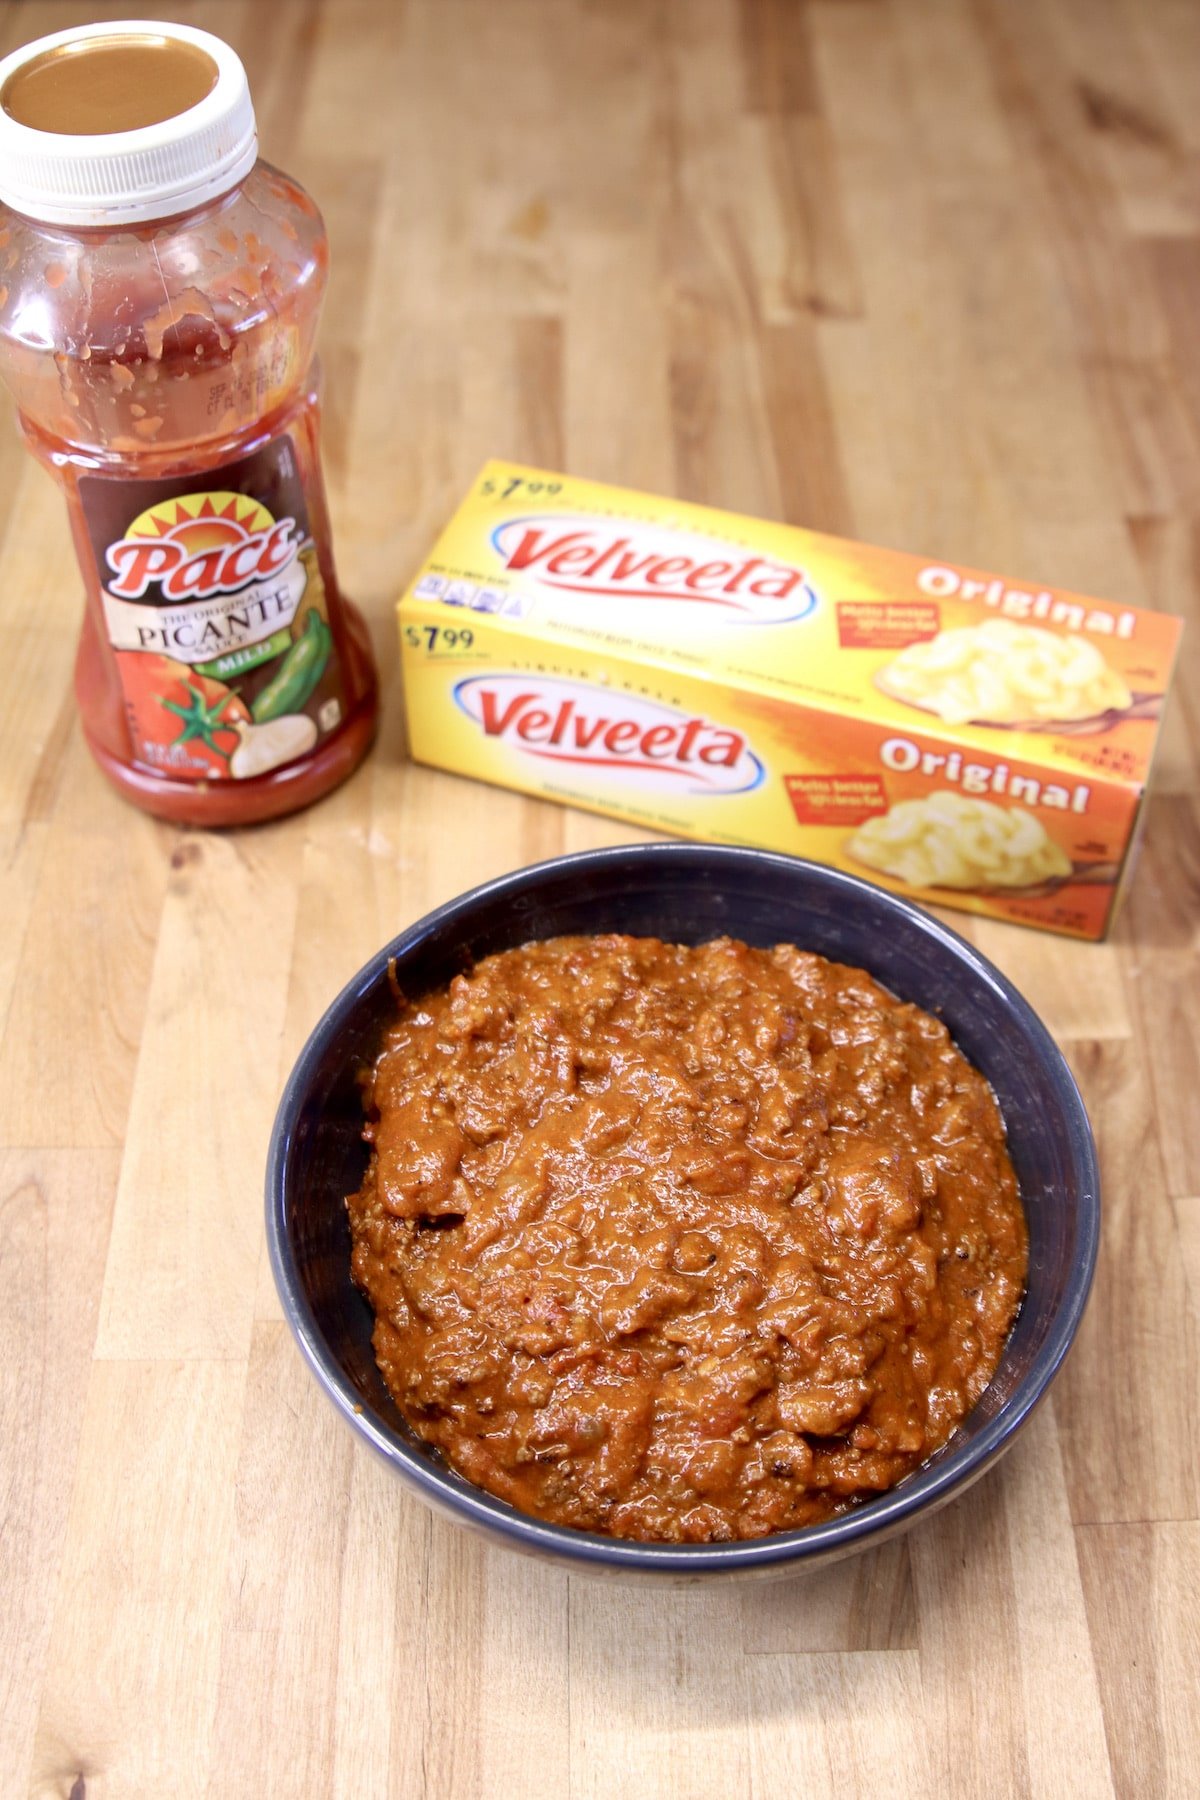 picante sauce, Velveeta, Chili in a bowl for dip.